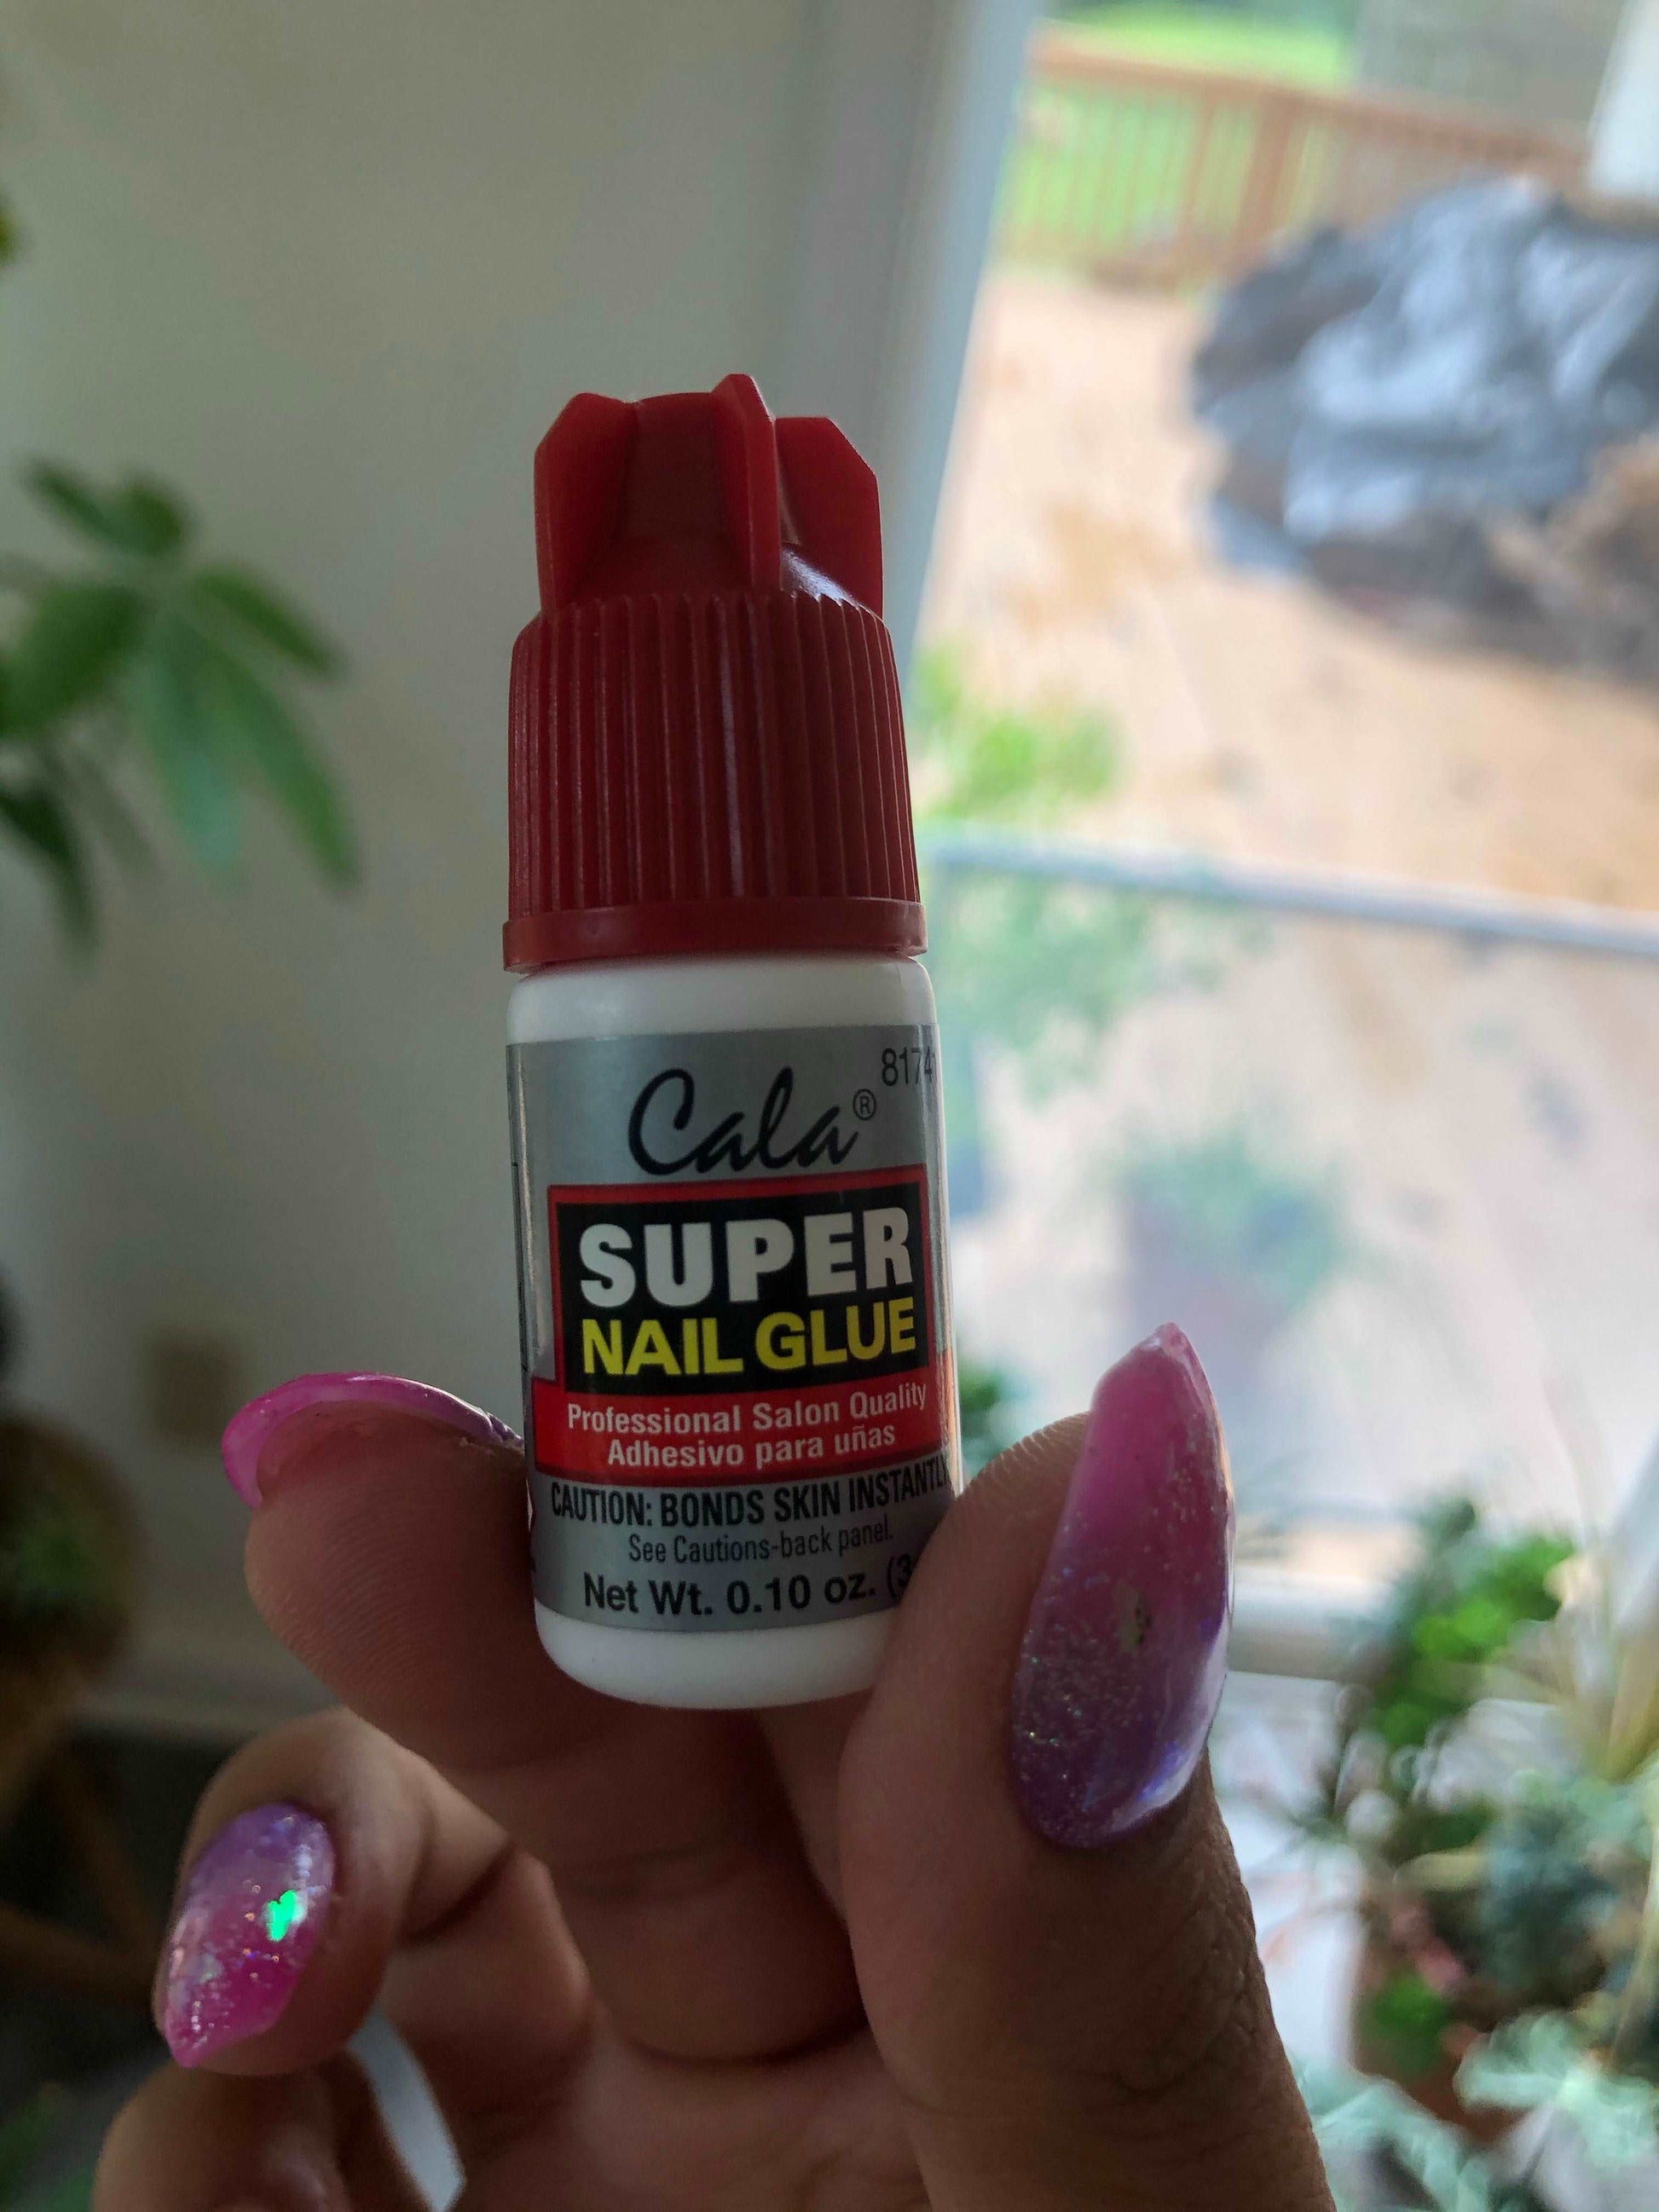 Super Nail Glue